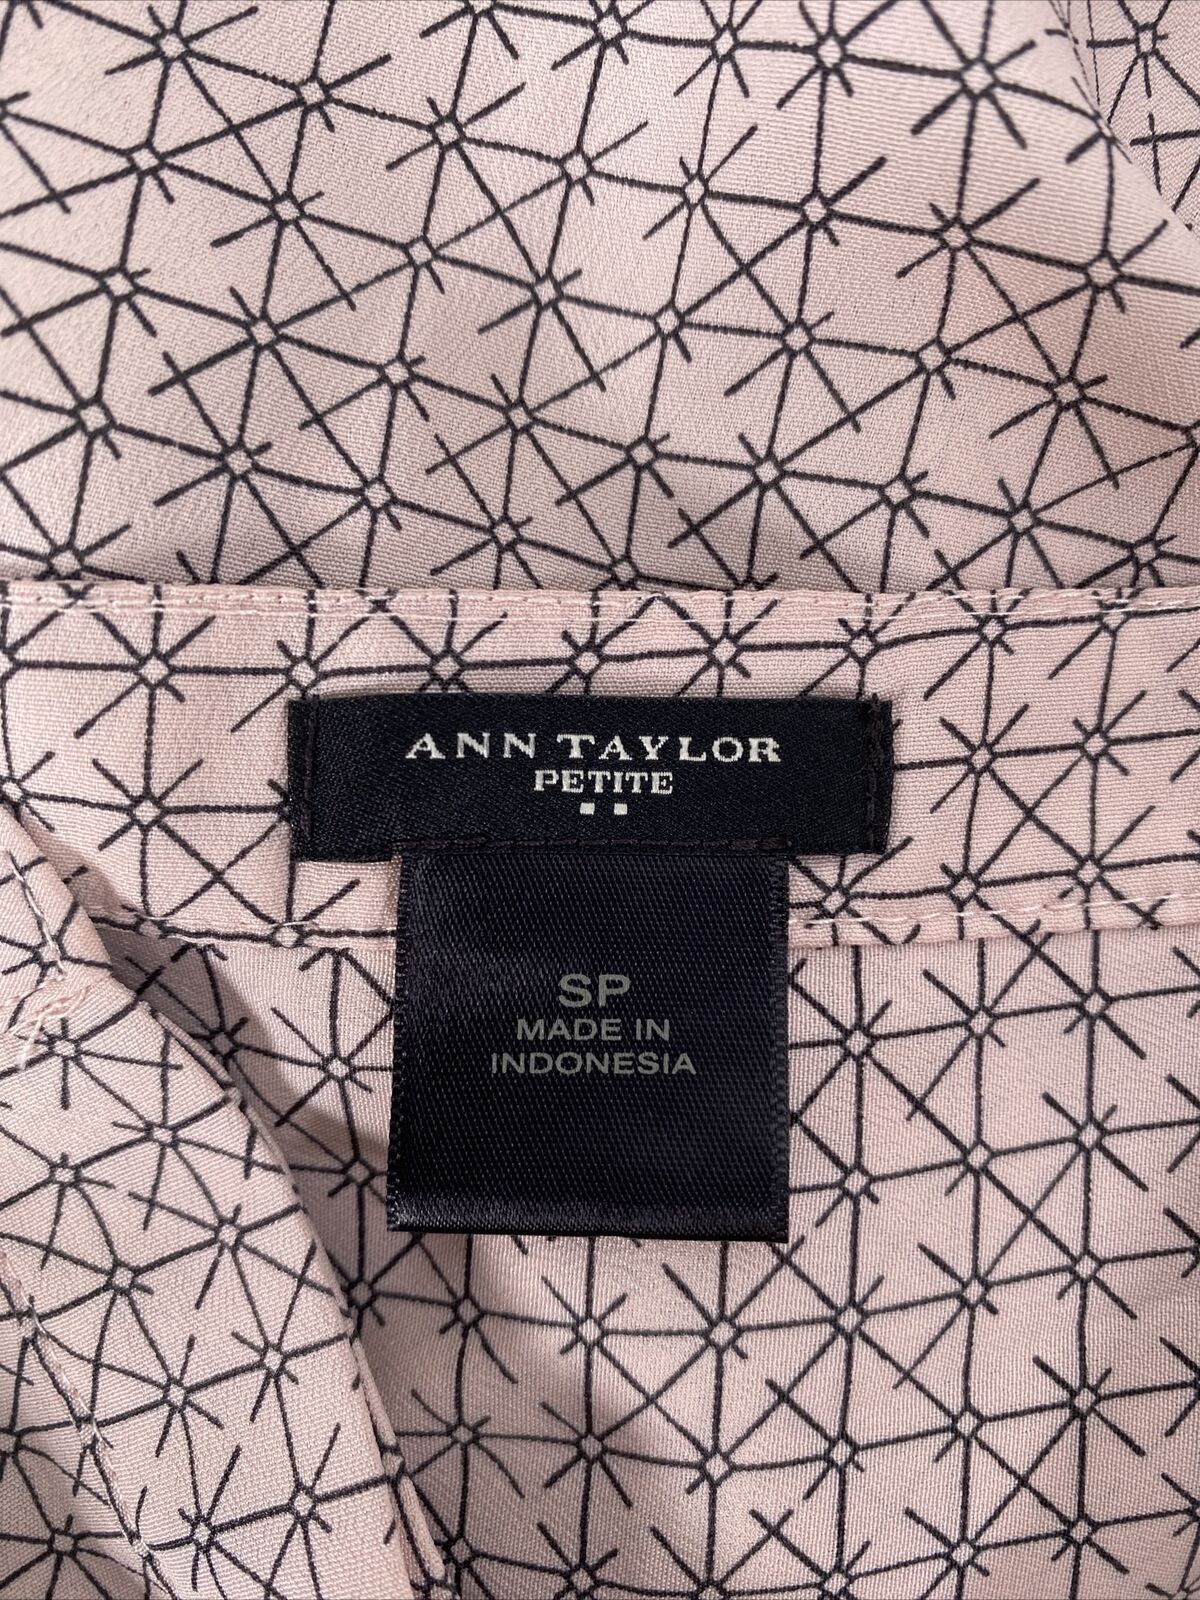 Ann Taylor Women's Pink Long Sleeve 1/2 Button Up Blouse Top - Petite S